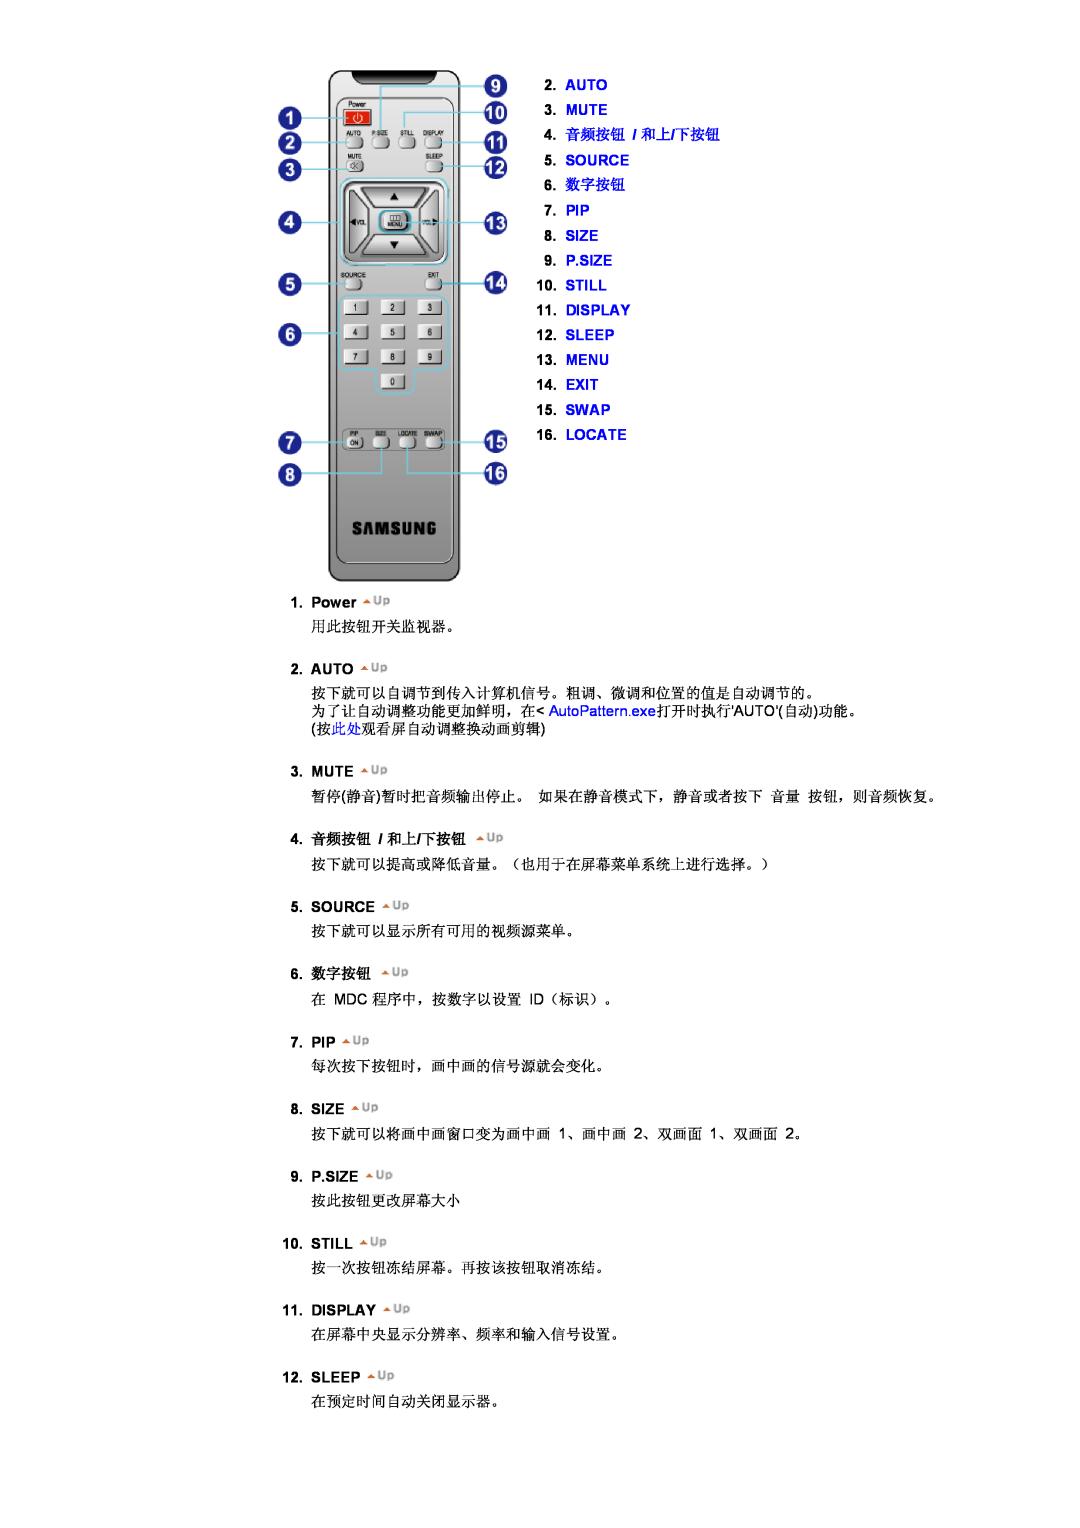 Samsung CK40BSNS/EDC AUTO 3. MUTE, 4. 音频按钮 / 和上/下按钮, Source, 6. 数字按钮, EXIT 15. SWAP 16. LOCATE, Power, Auto, Mute, Pip 